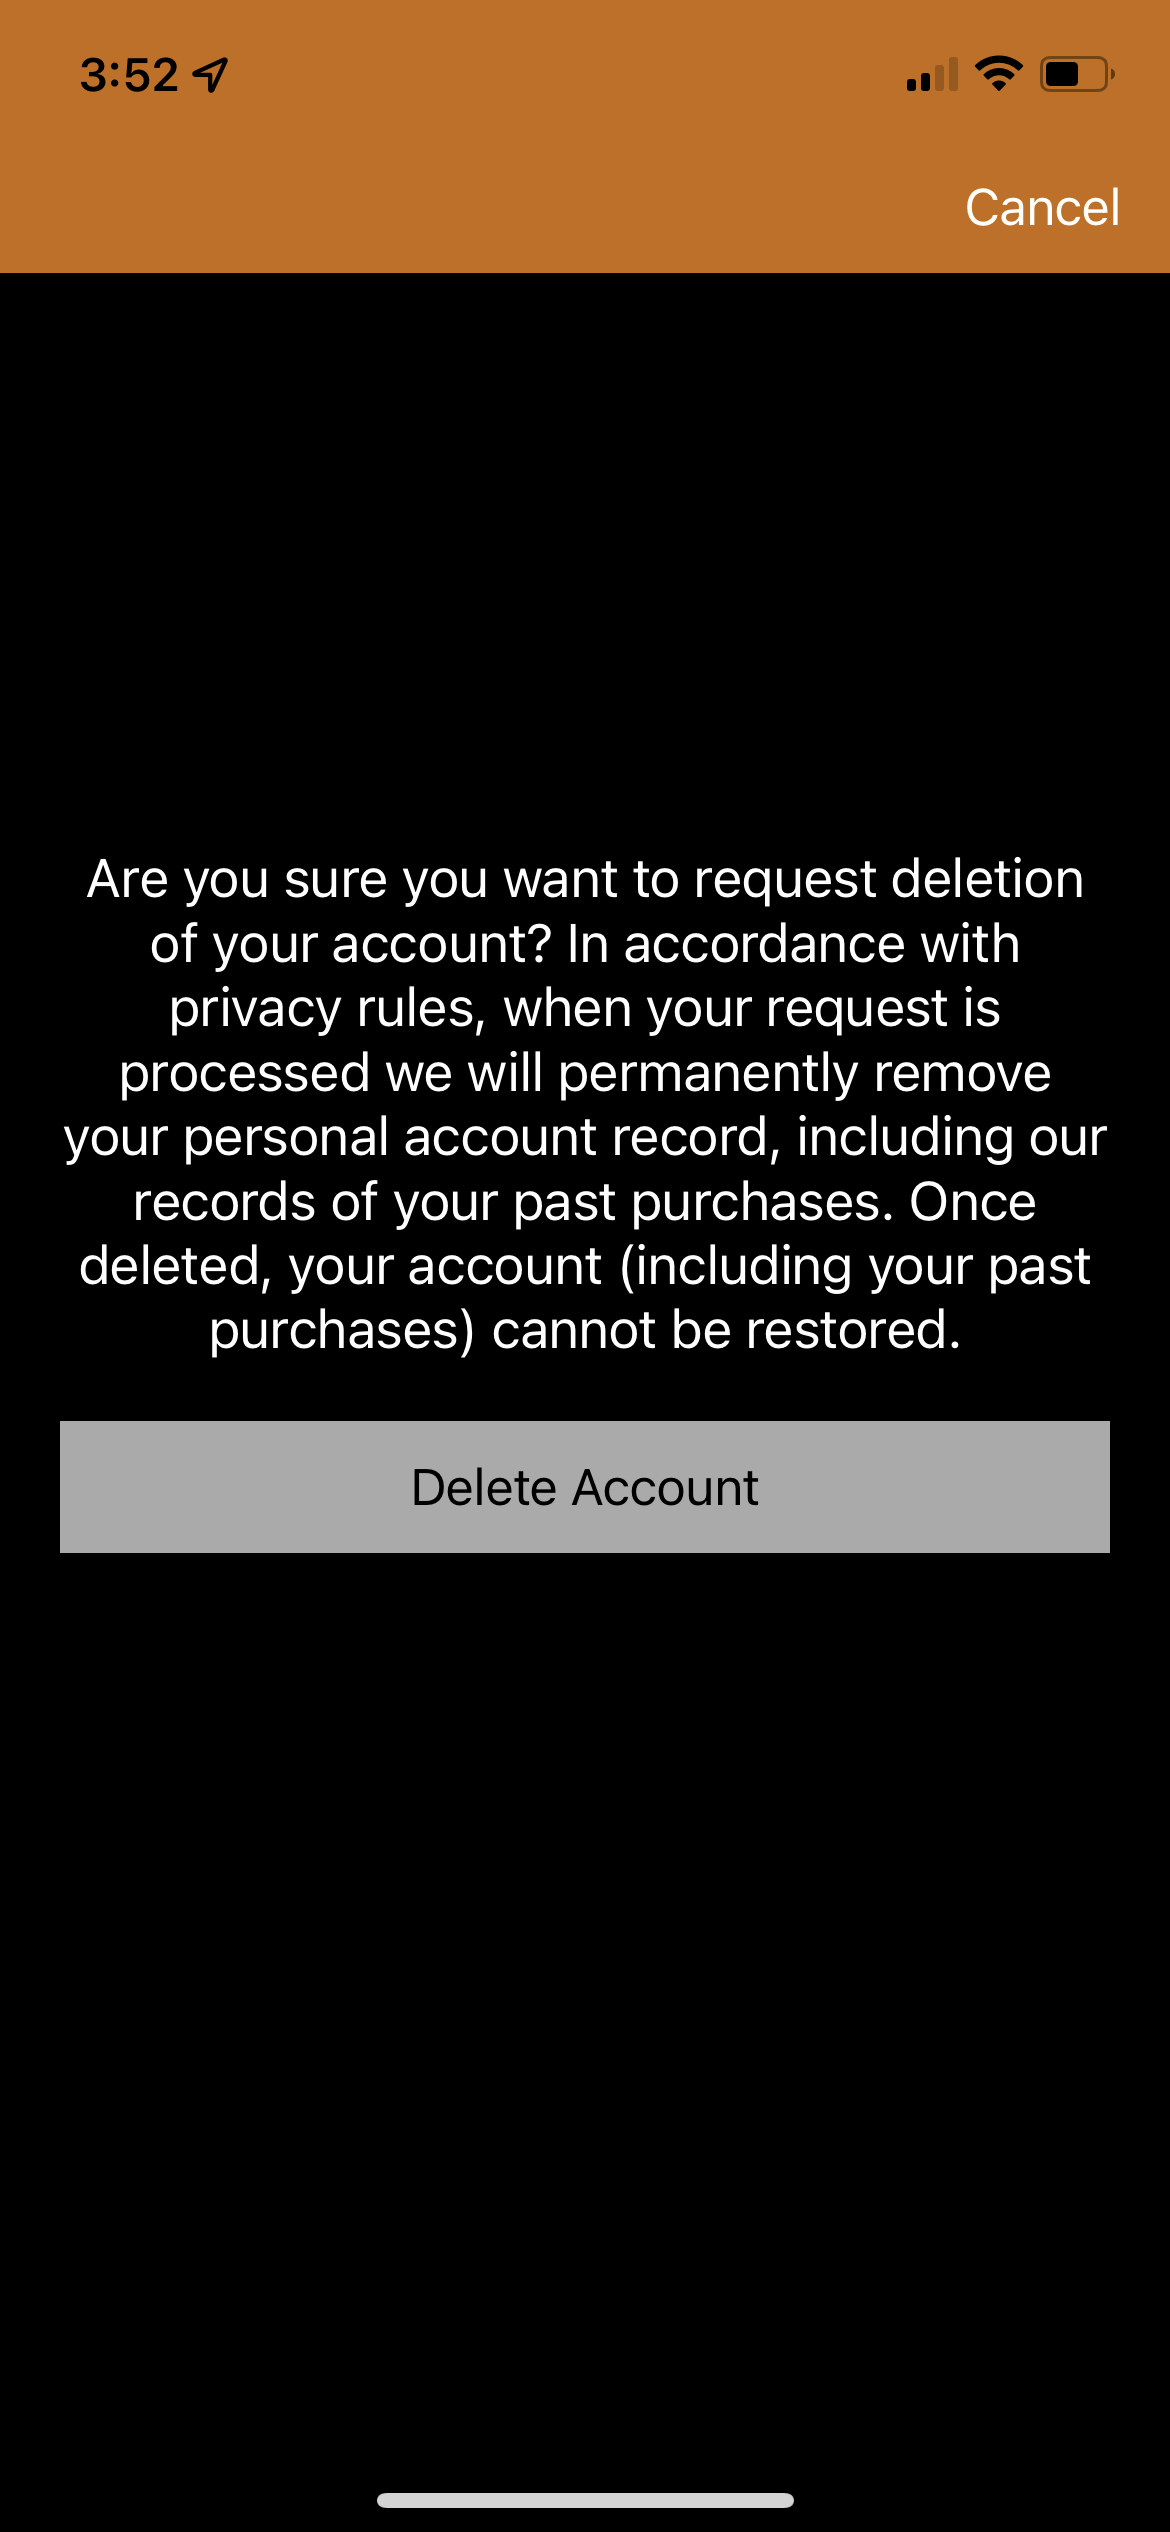 Delete_Account_-_Confirm.png